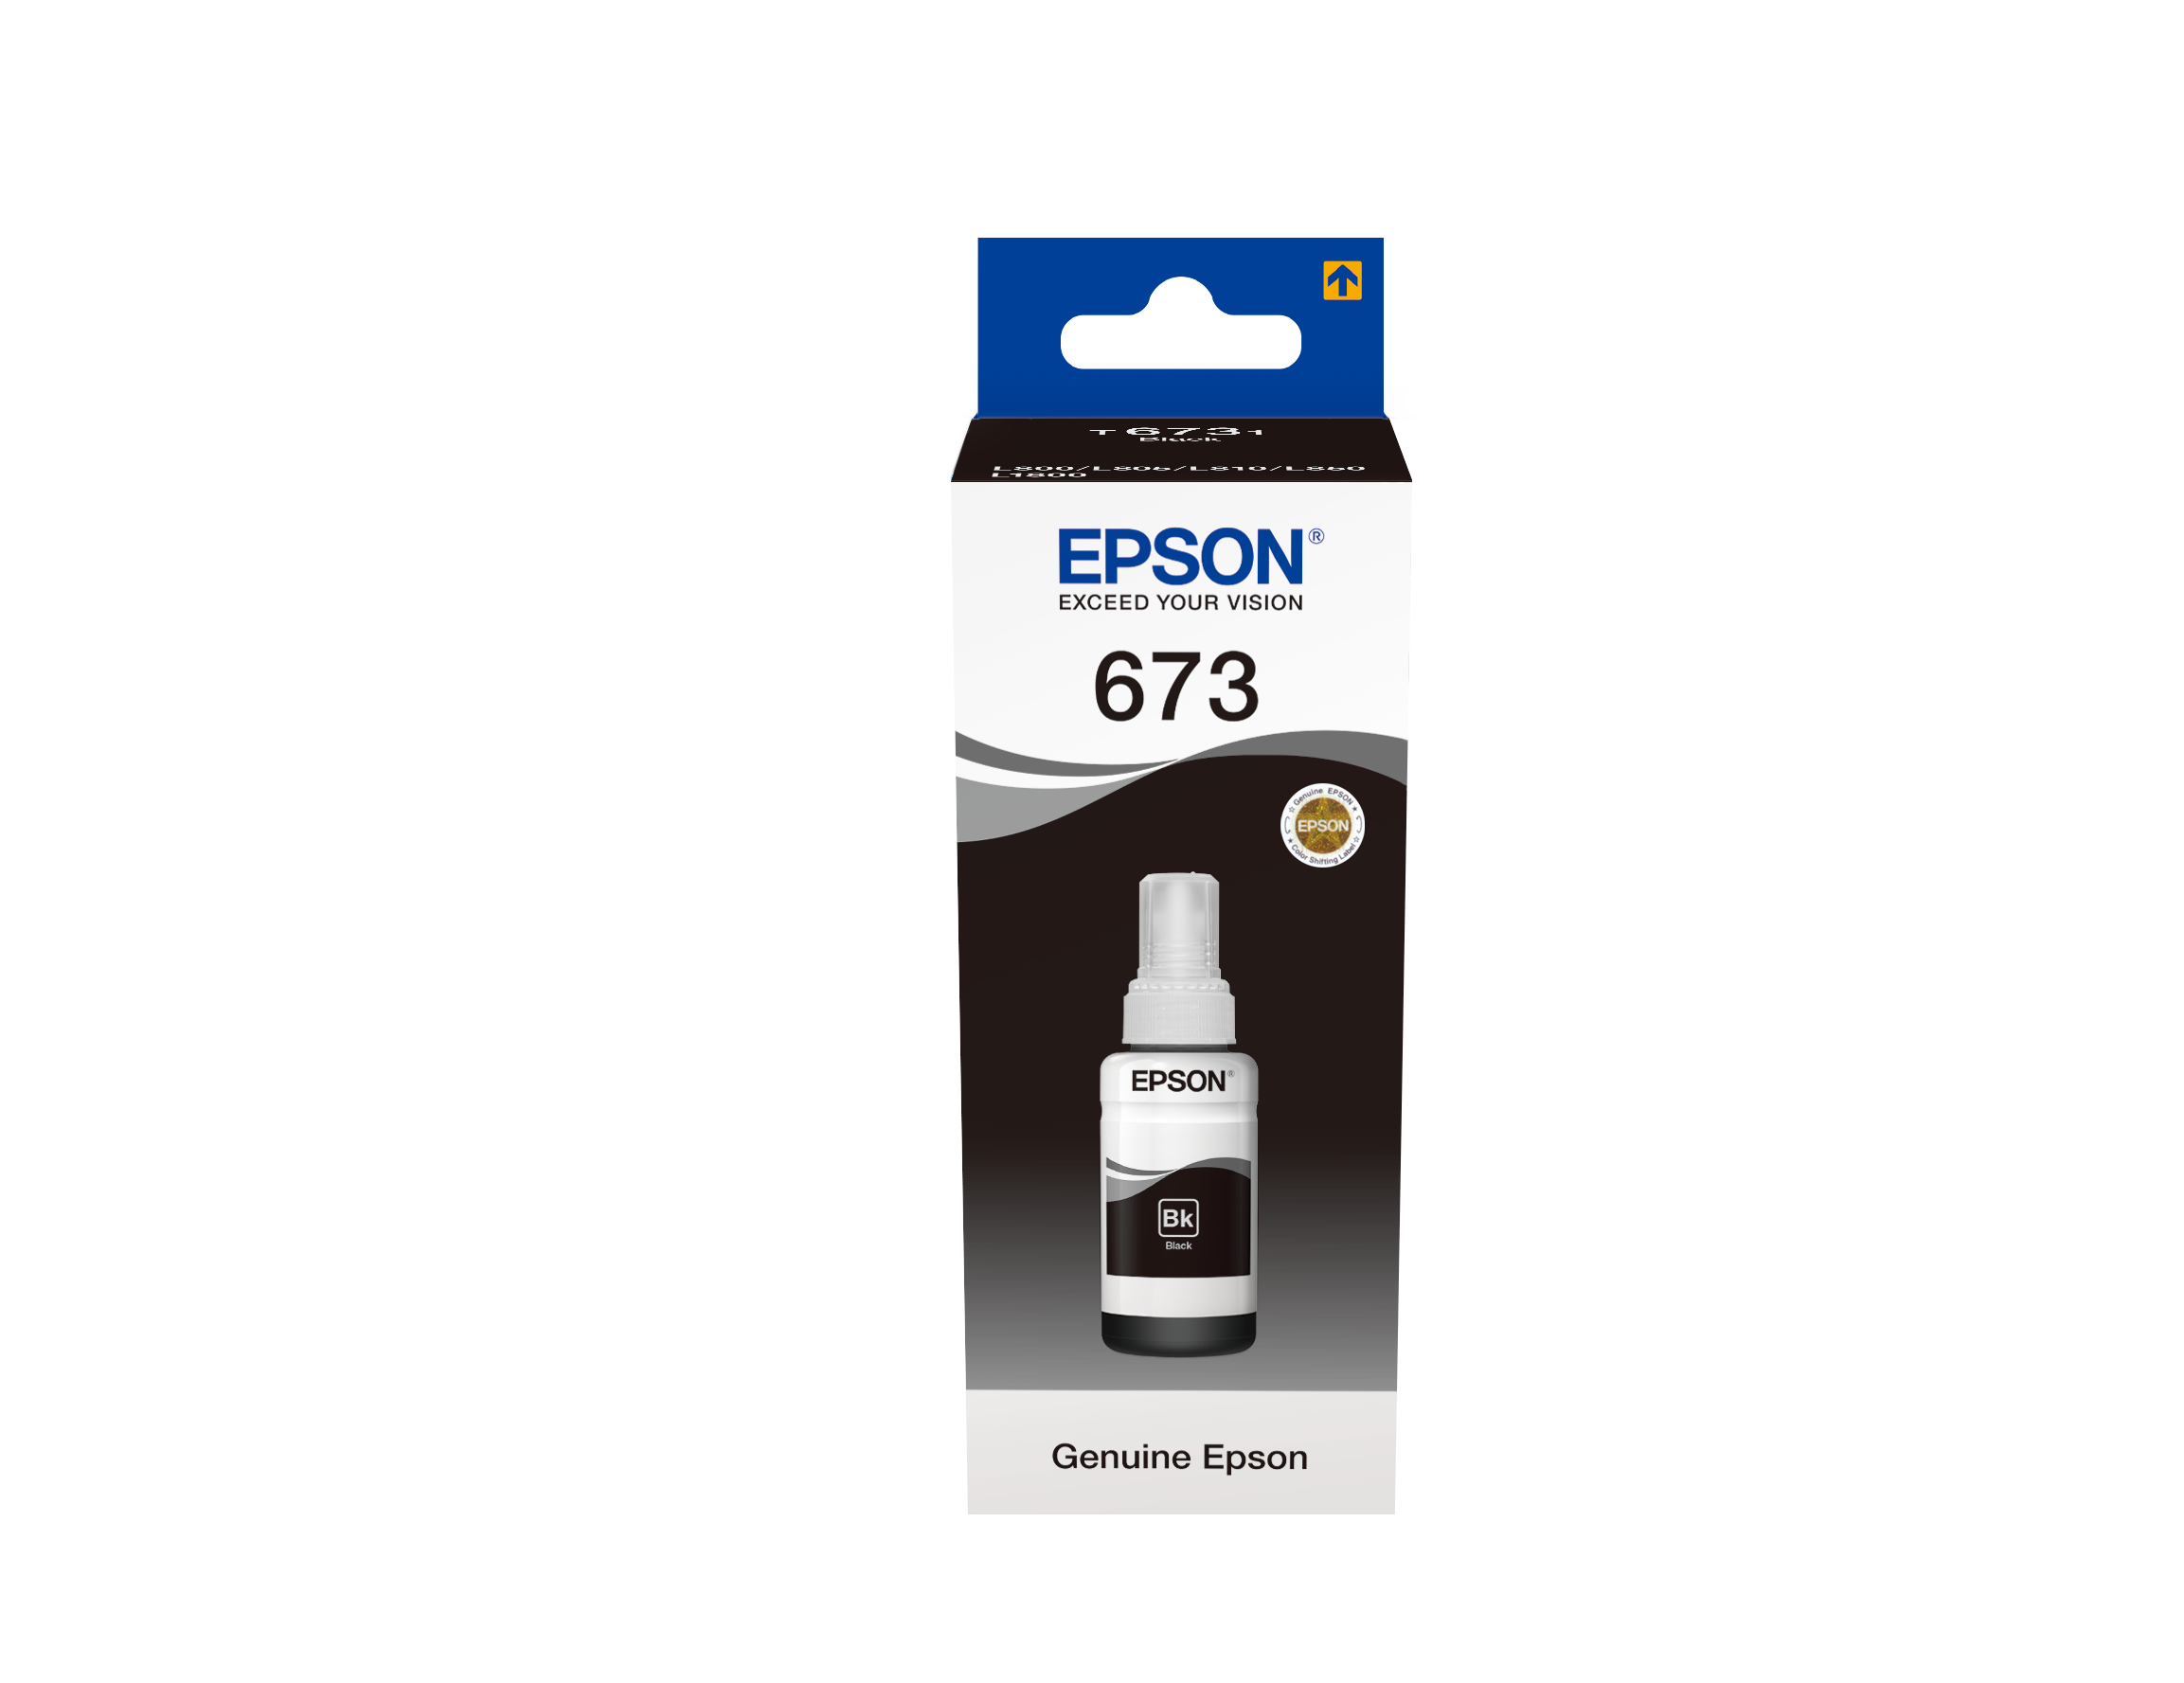 Epson T664 EcoTank Ink Bottle Black